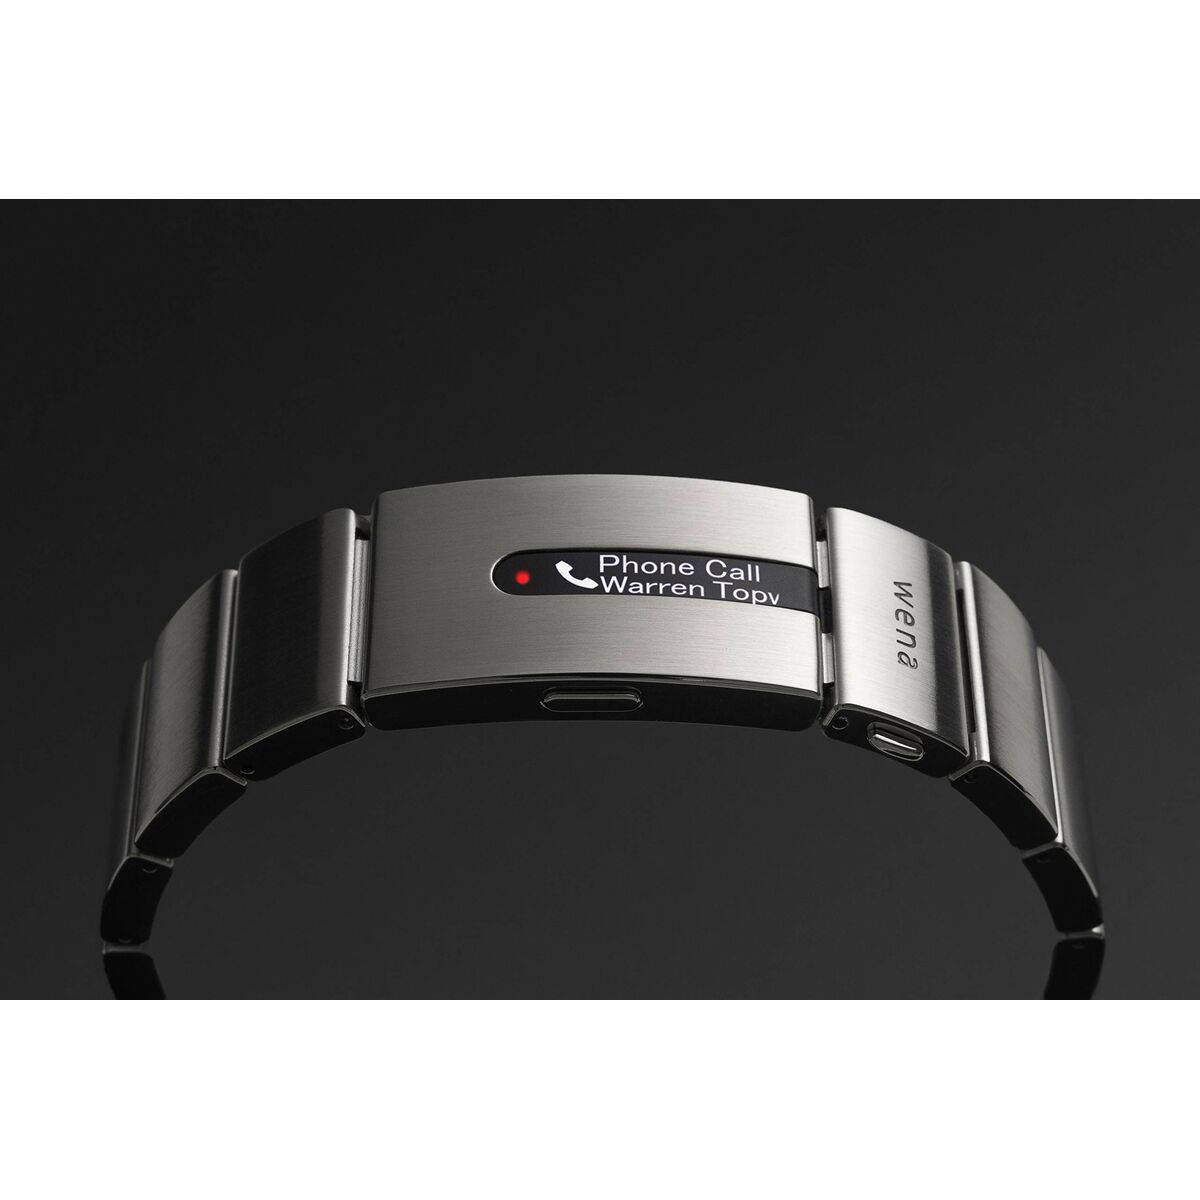 Horloge-armband Sony (Refurbished B)